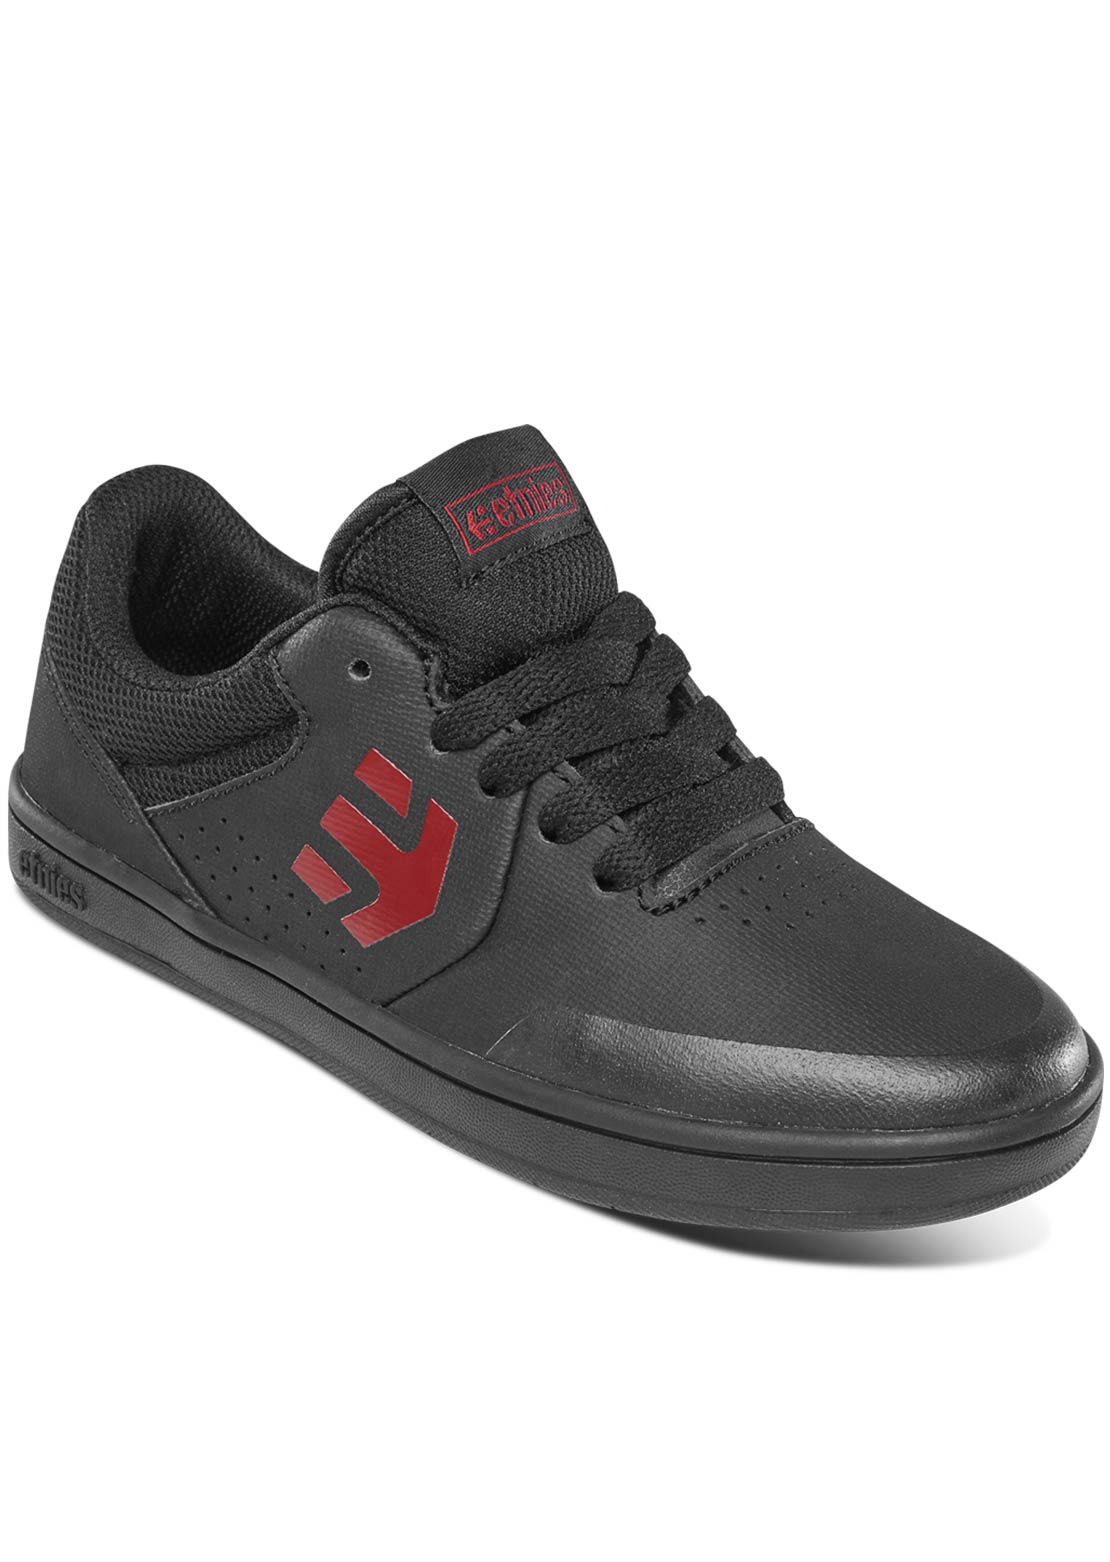 Etnies Junior Marana Shoes Black/Red/Black